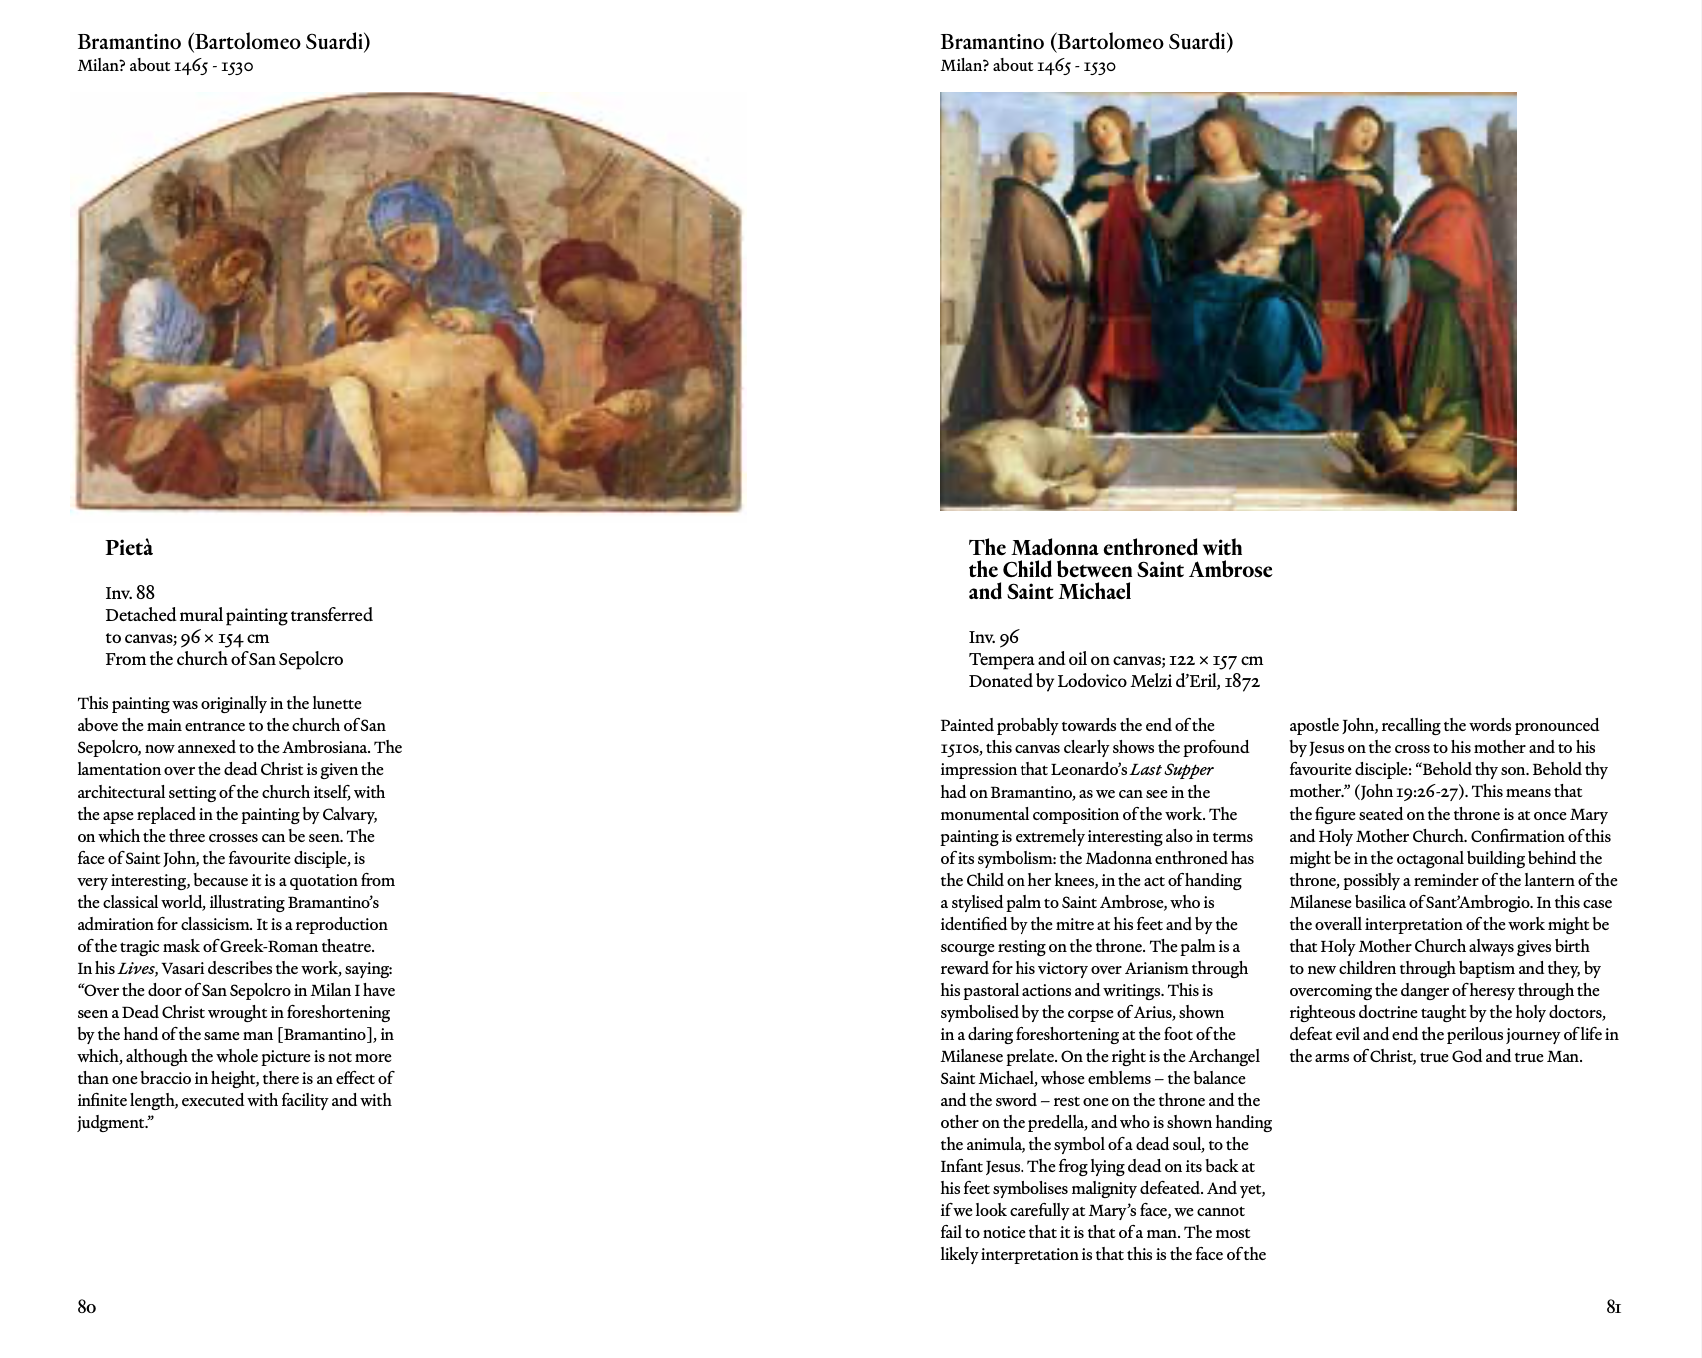 The Pinacoteca Ambrosiana Guide